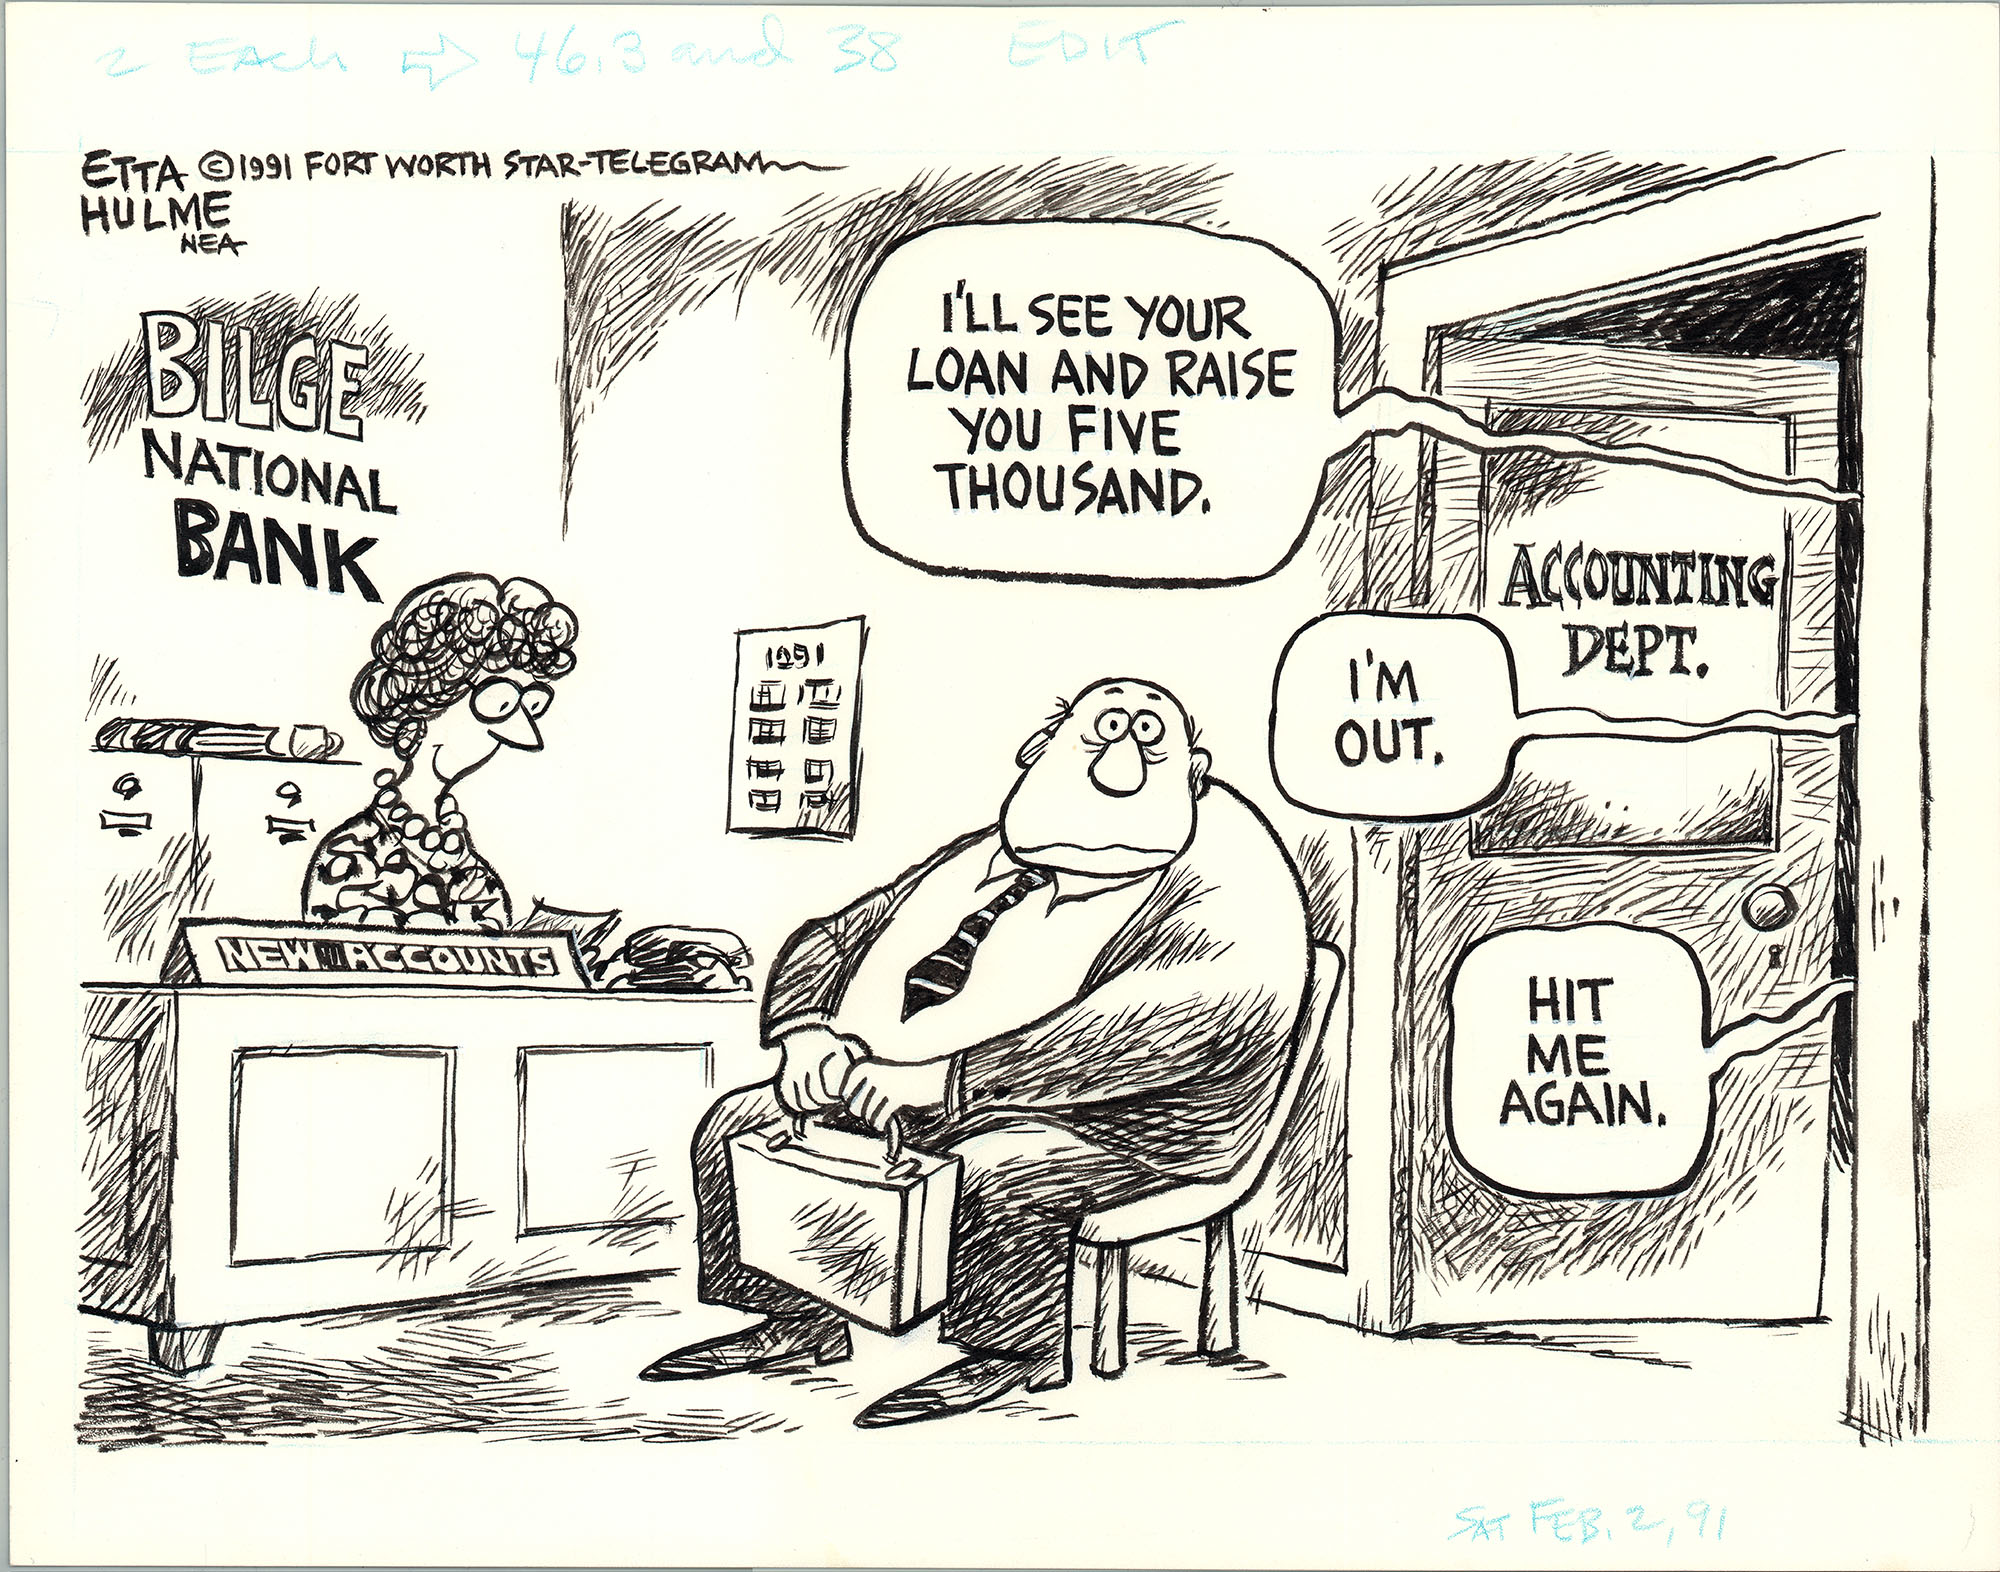 Bilge National Bank | Etta Hulme Cartoon Archive